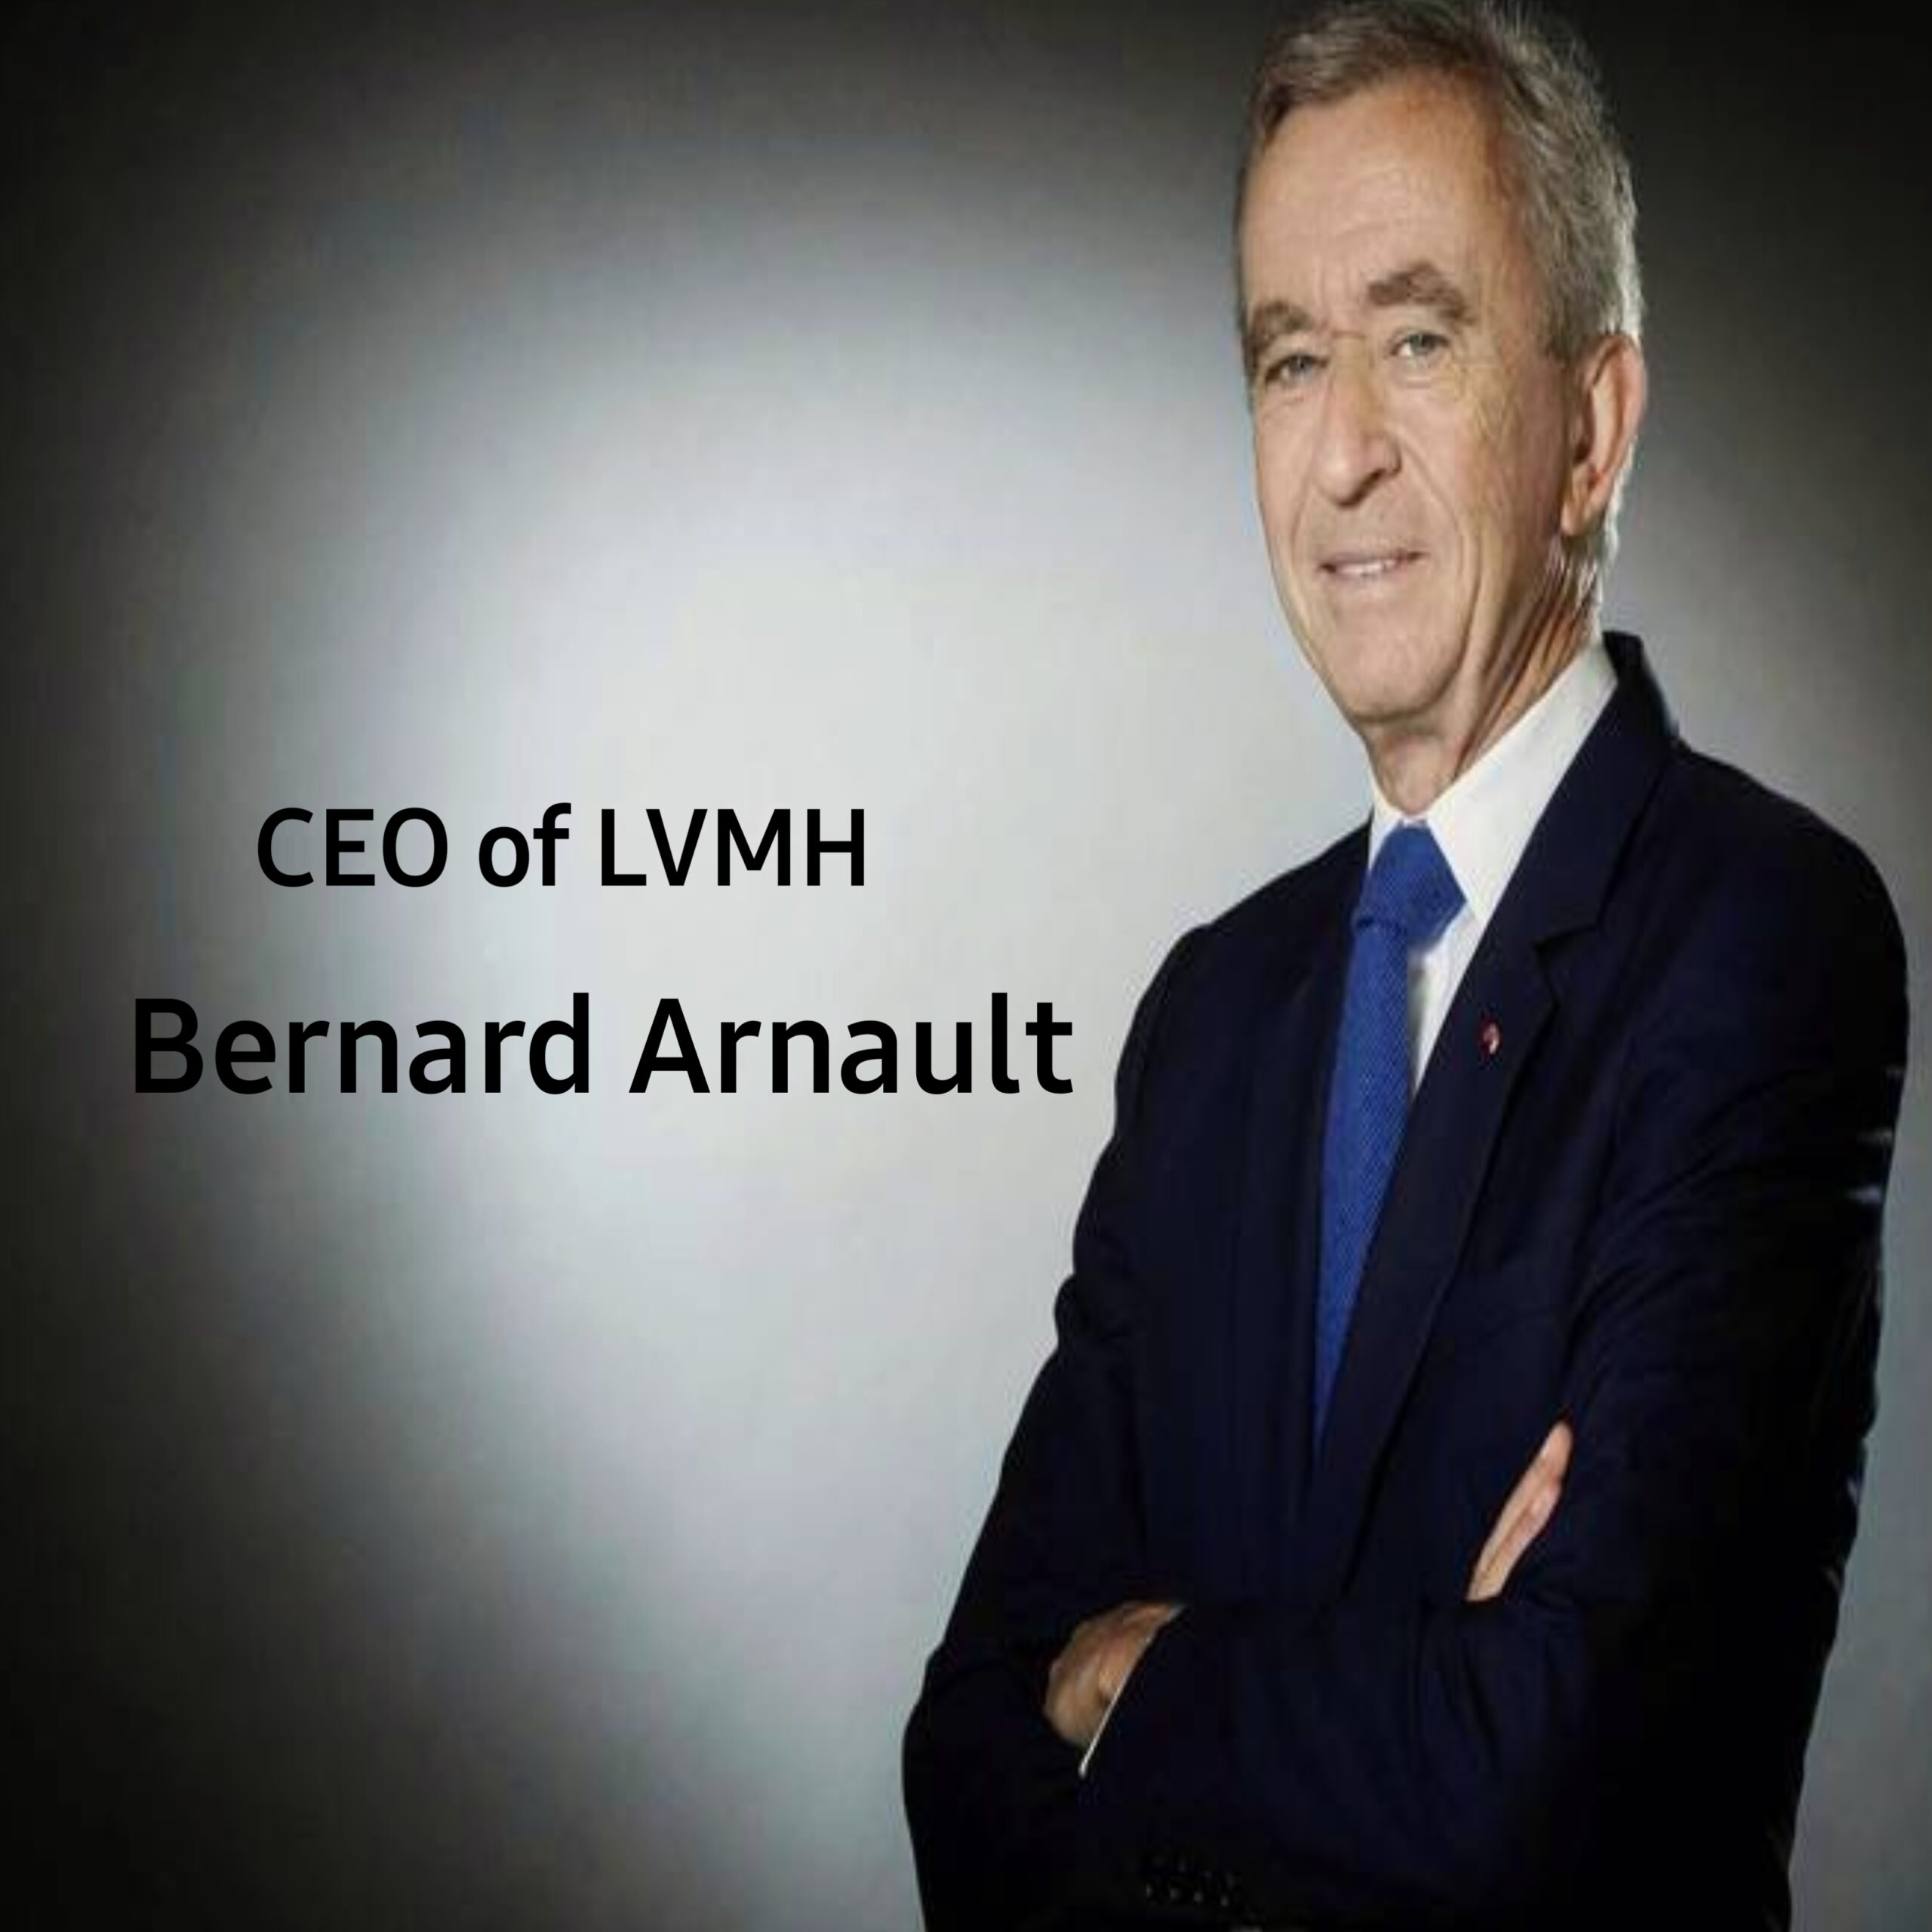 Bernard Arnault Biography, Business, Education